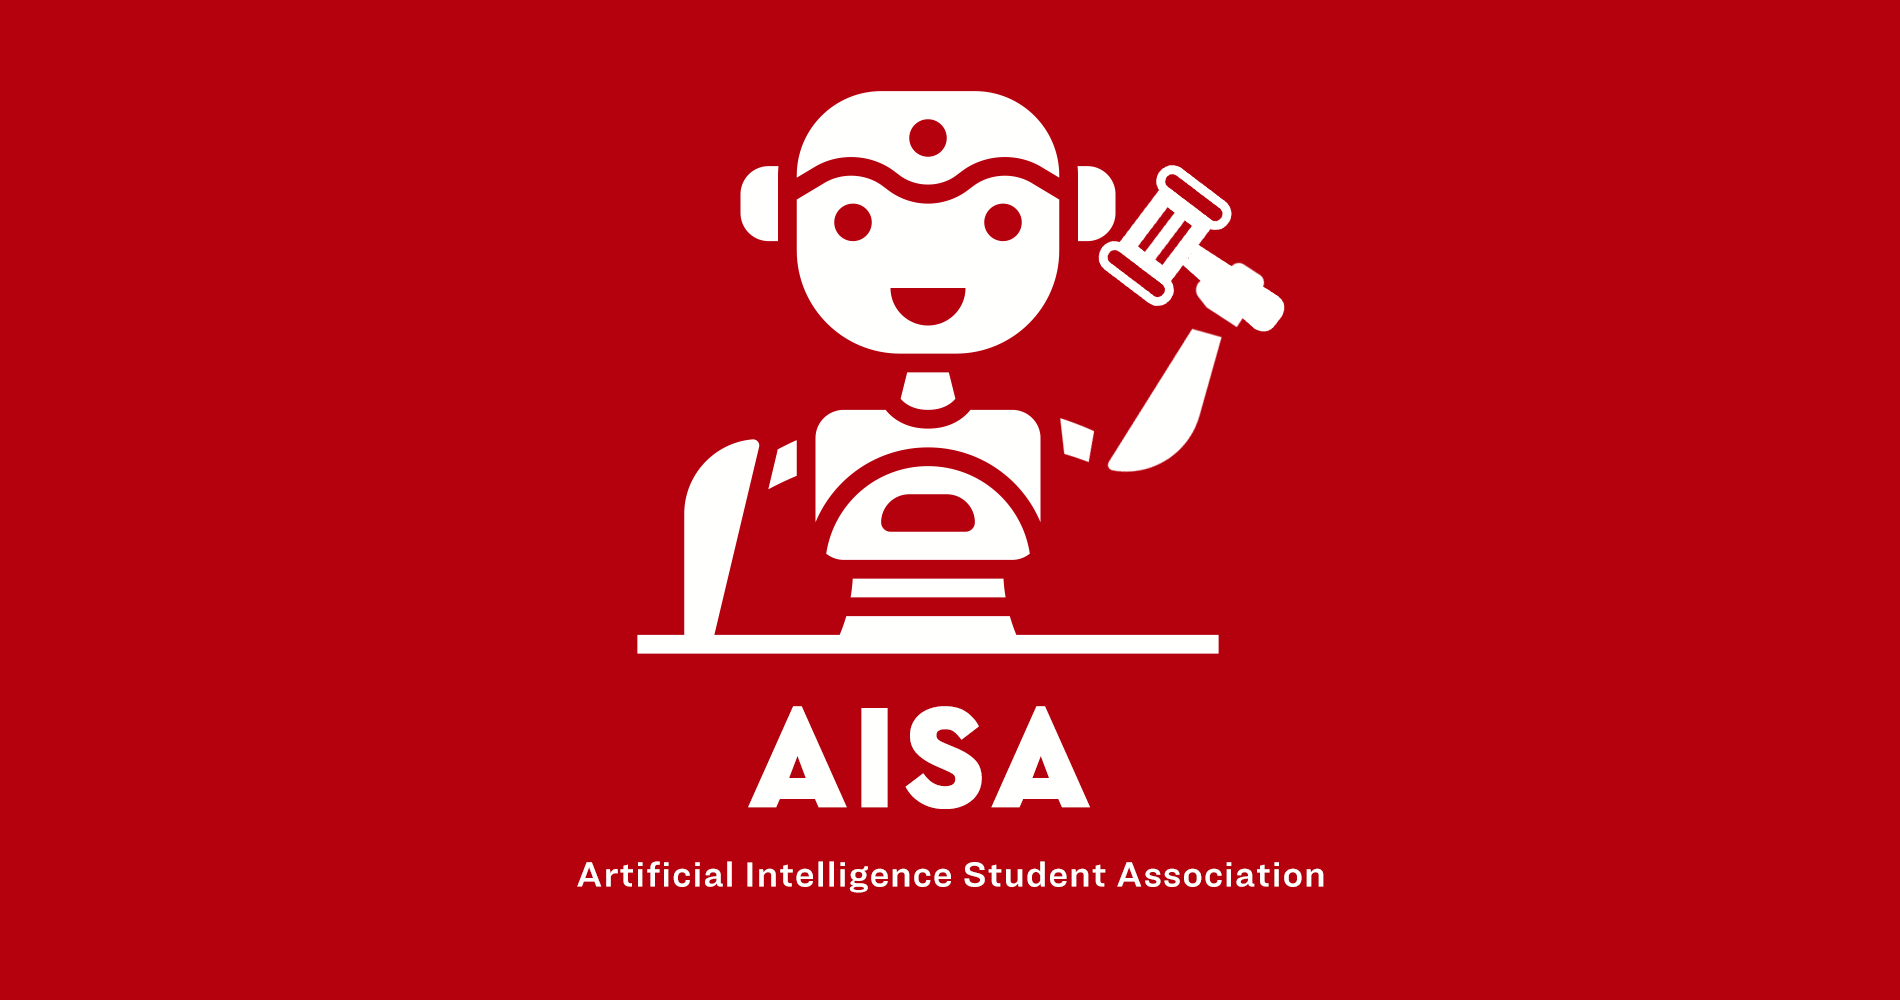 Artificial Intelligence Student Association logo